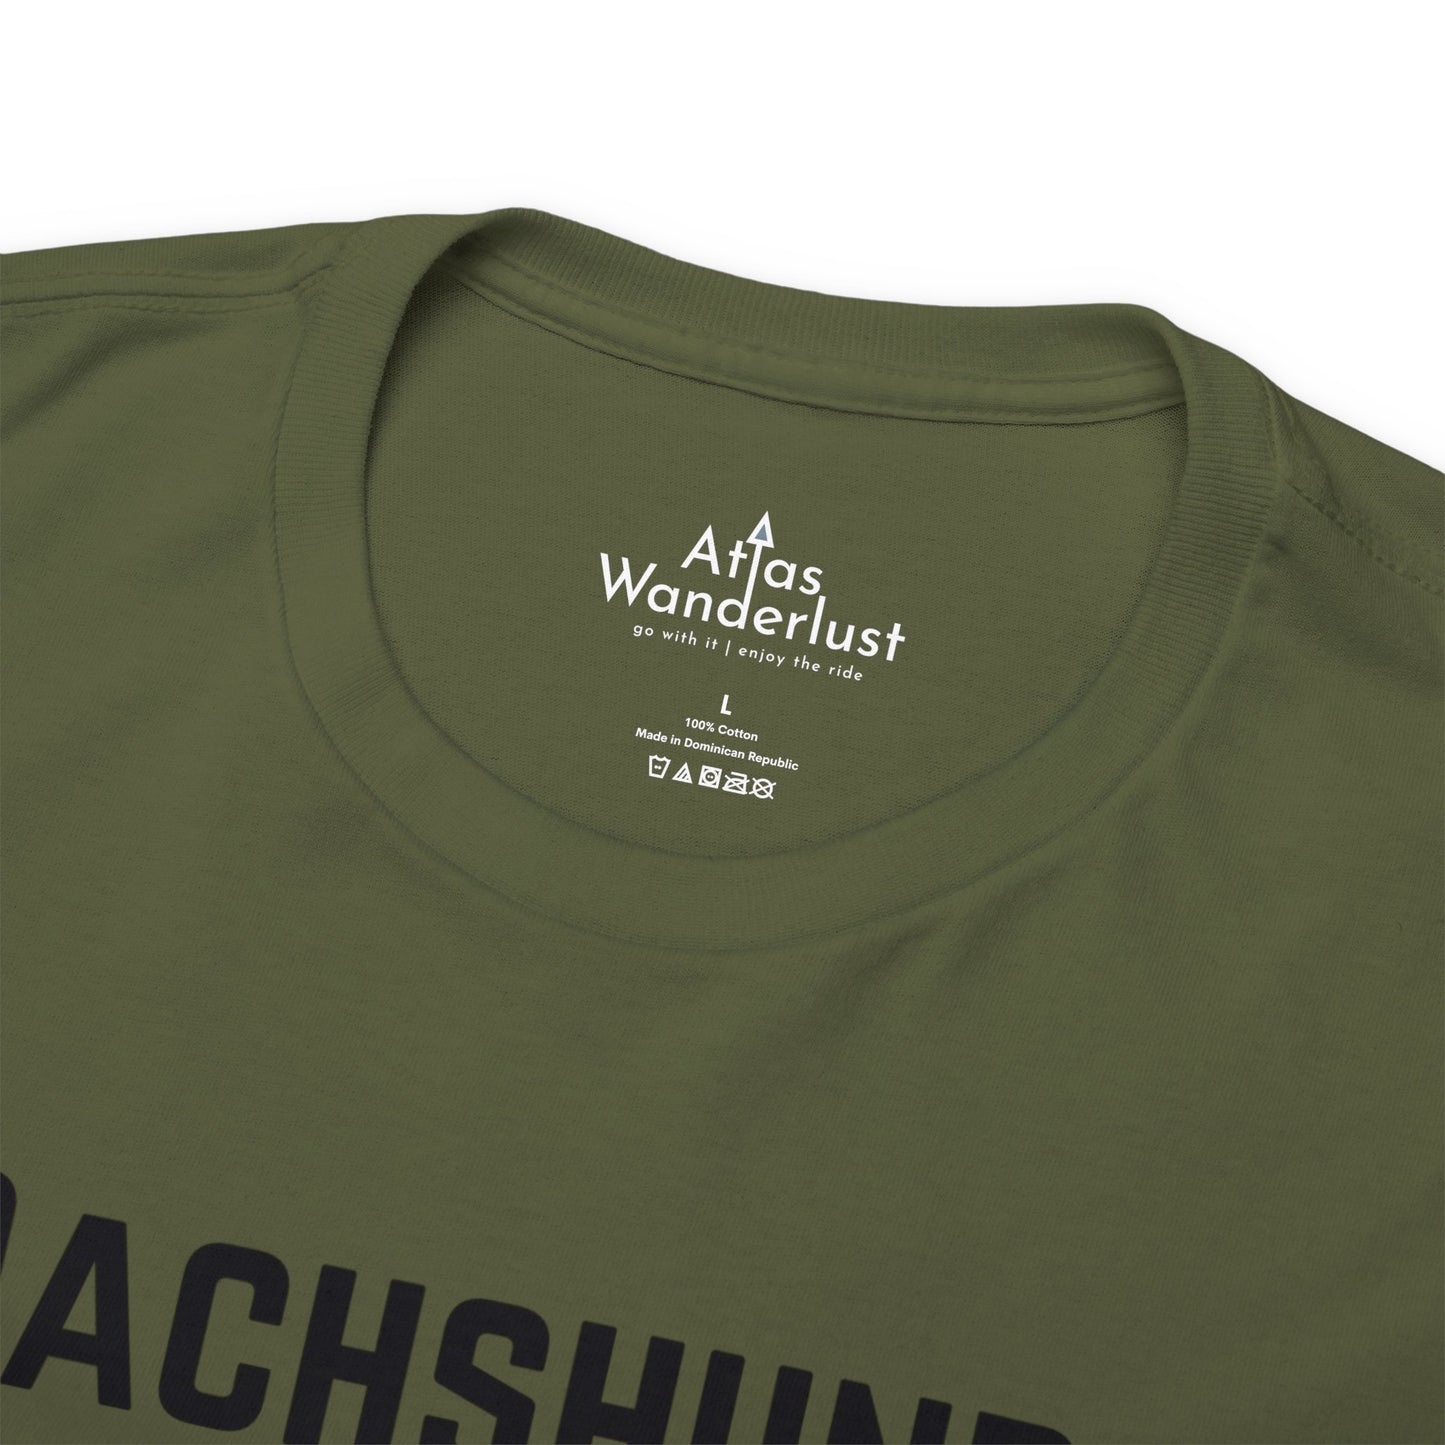 Dachshund T-Shirt, Long Body Wiener Dog Tee